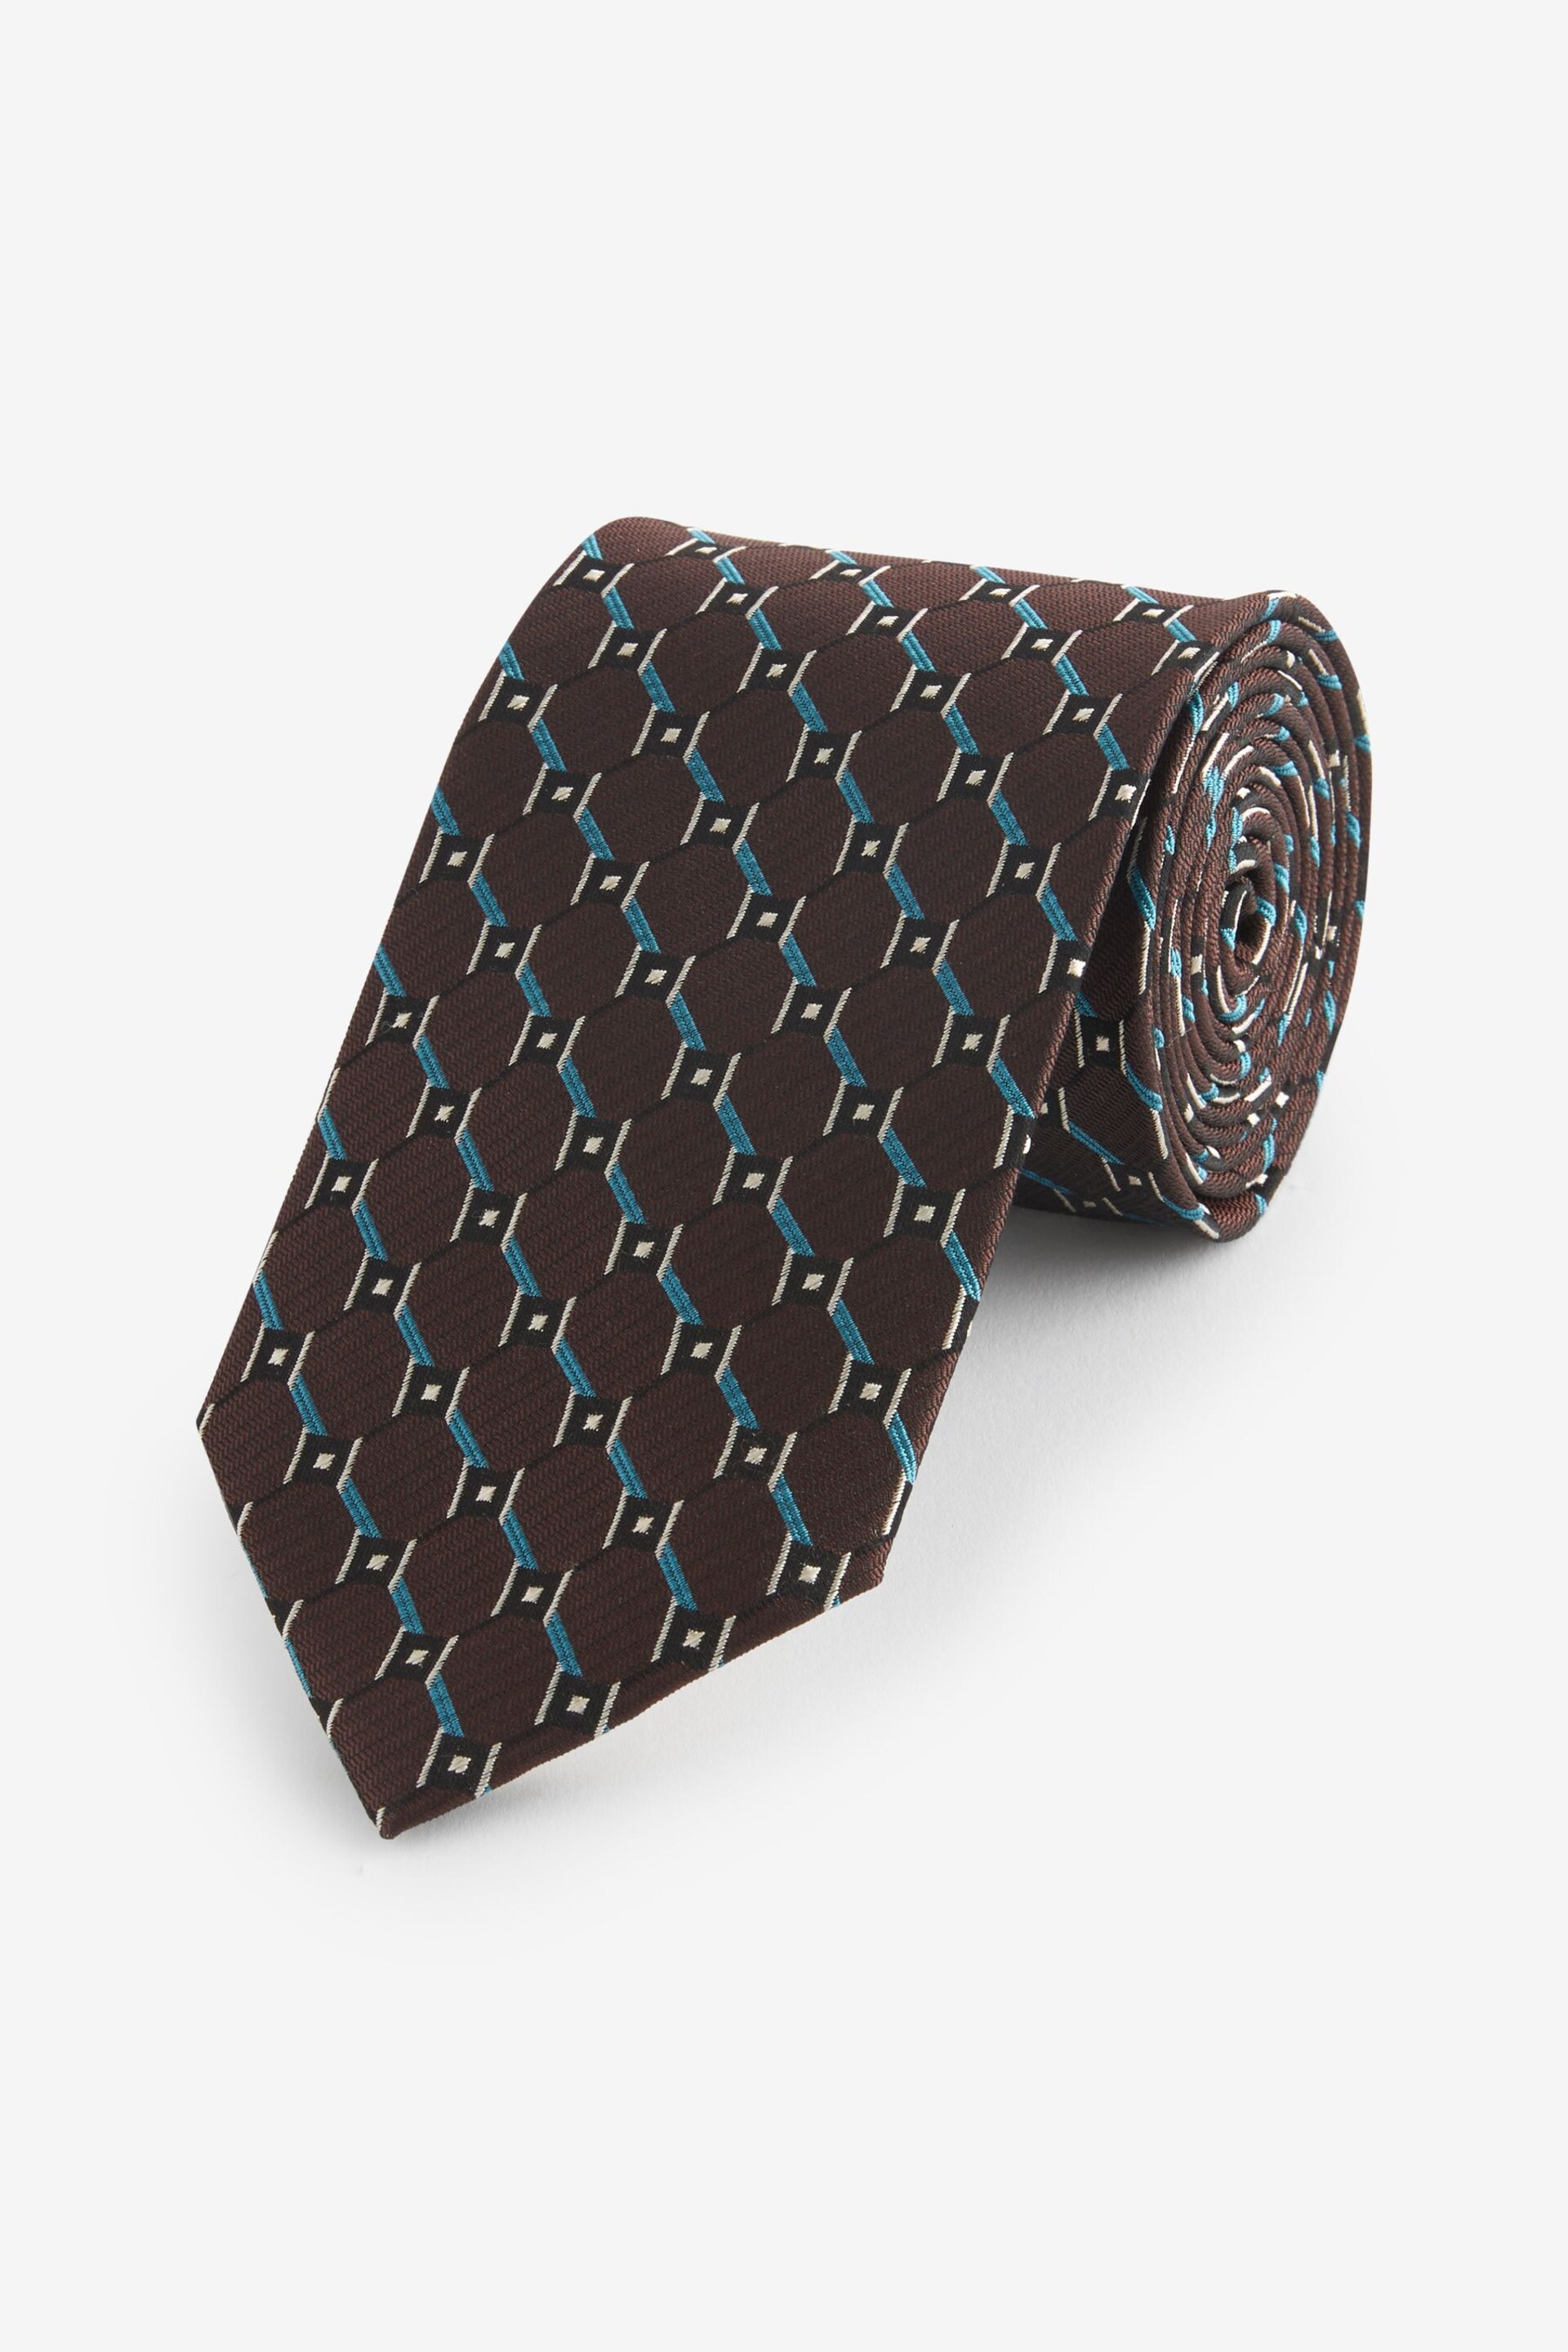 Brown/Teal Blue Textured Silk Tie - Image 1 of 3